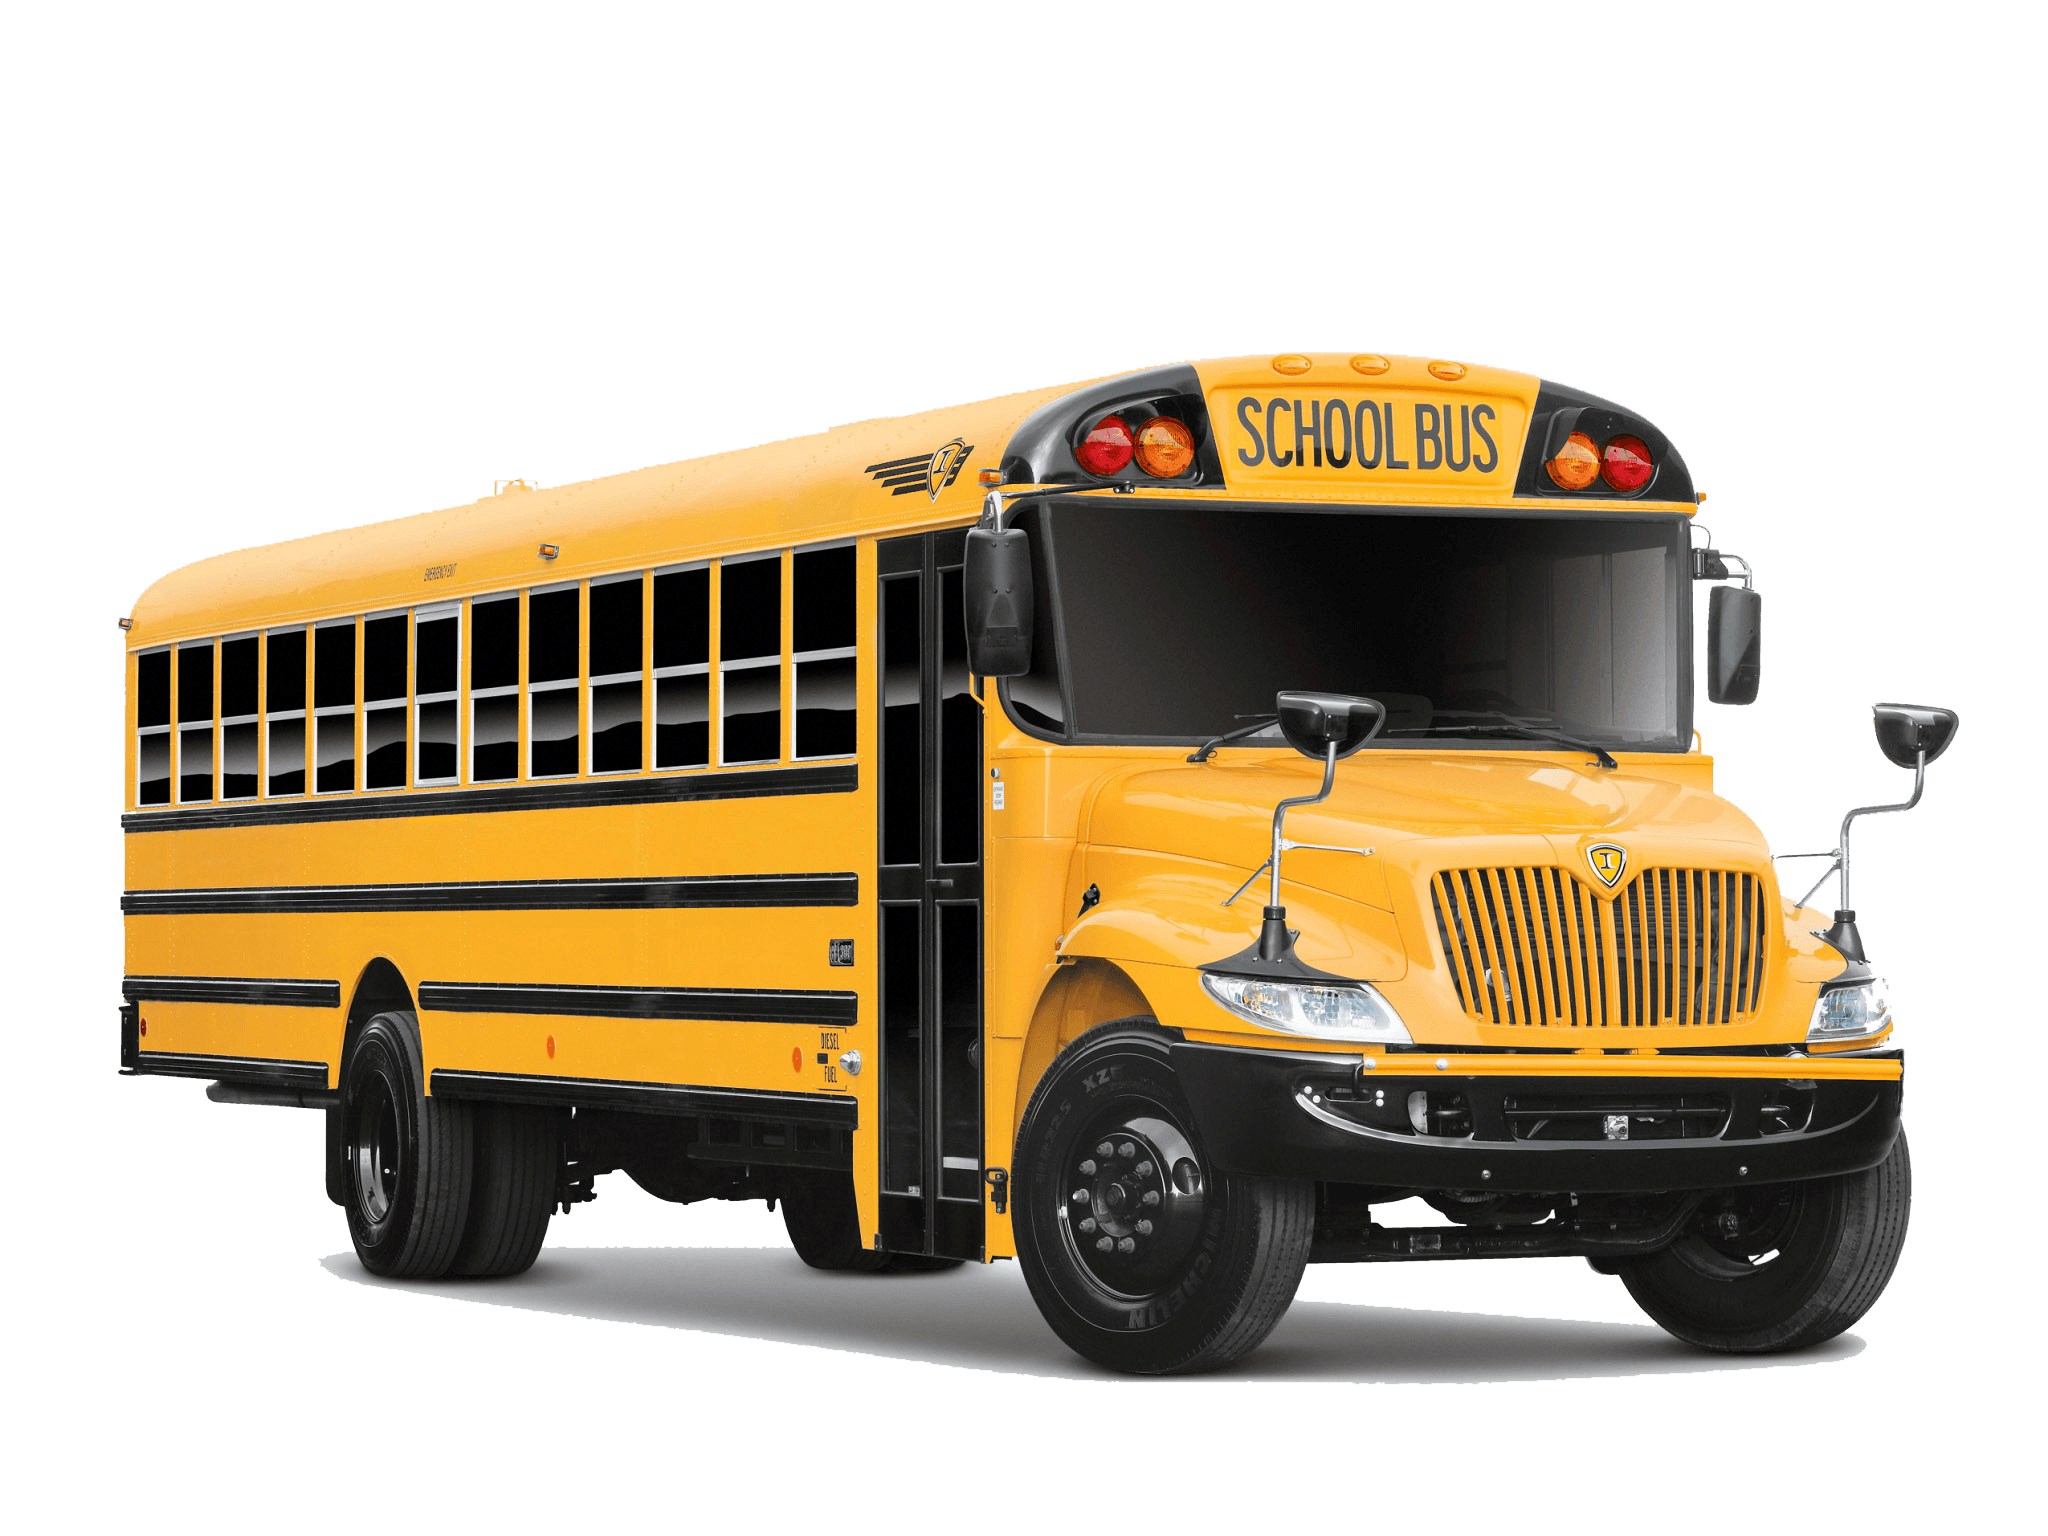 School-Bus-Image-3.png